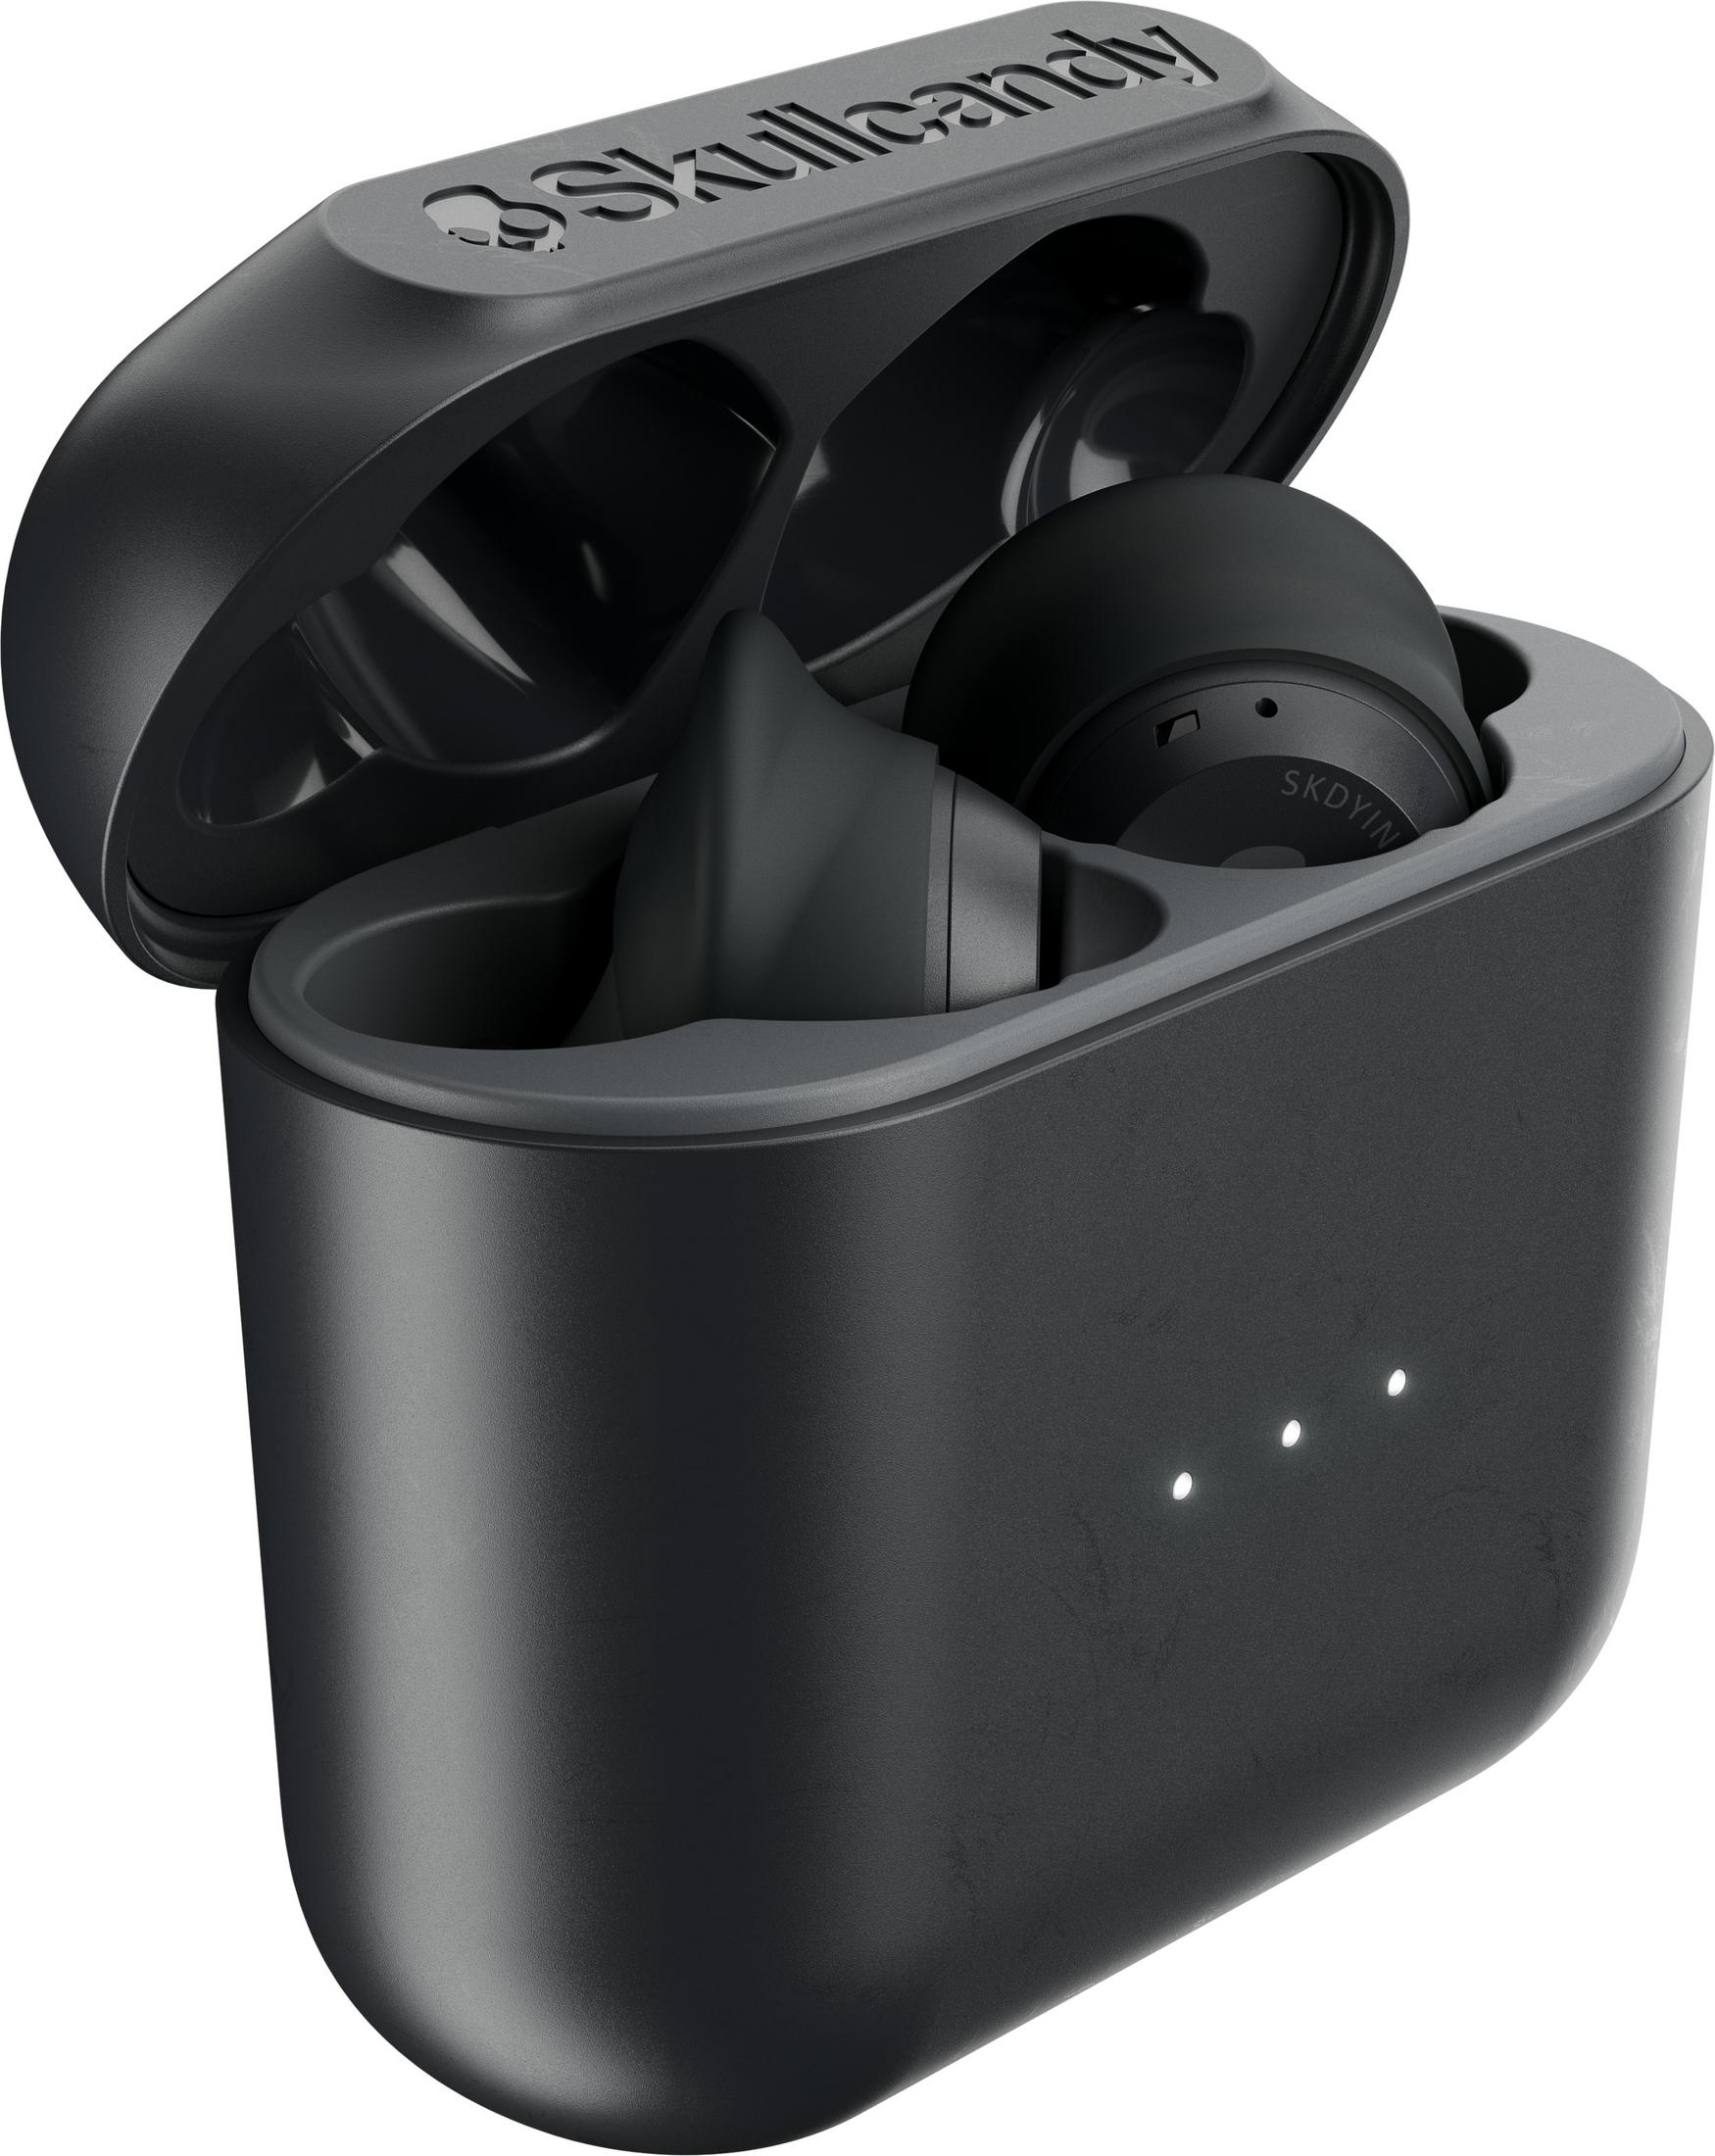 In-ear S2SSW-M003 Schwarz BLACK/BLACK, WL SKULLCANDY HS Bluetooth Kopfhörer INDY TRUE